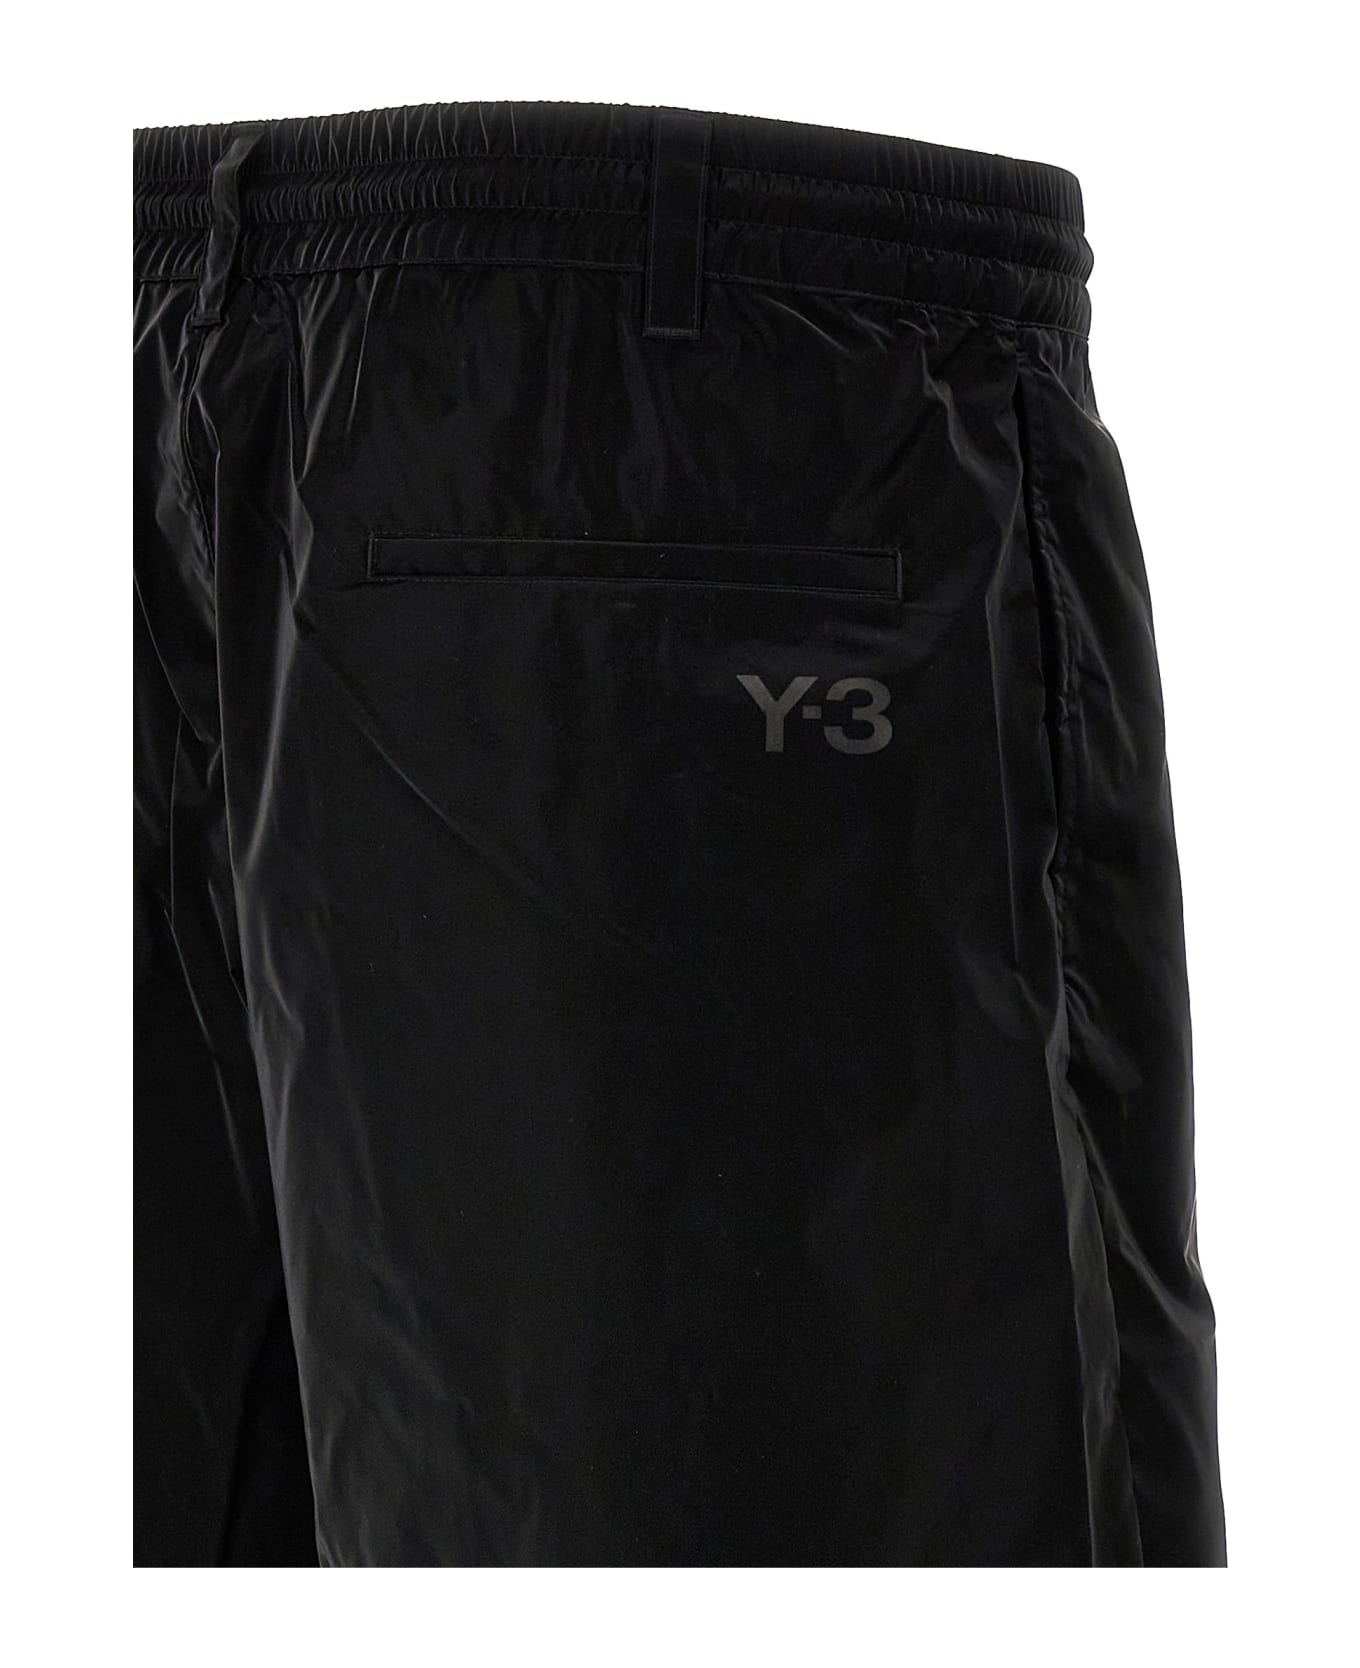 Y-3 Side Bands Bermuda Shorts - Black   name:468